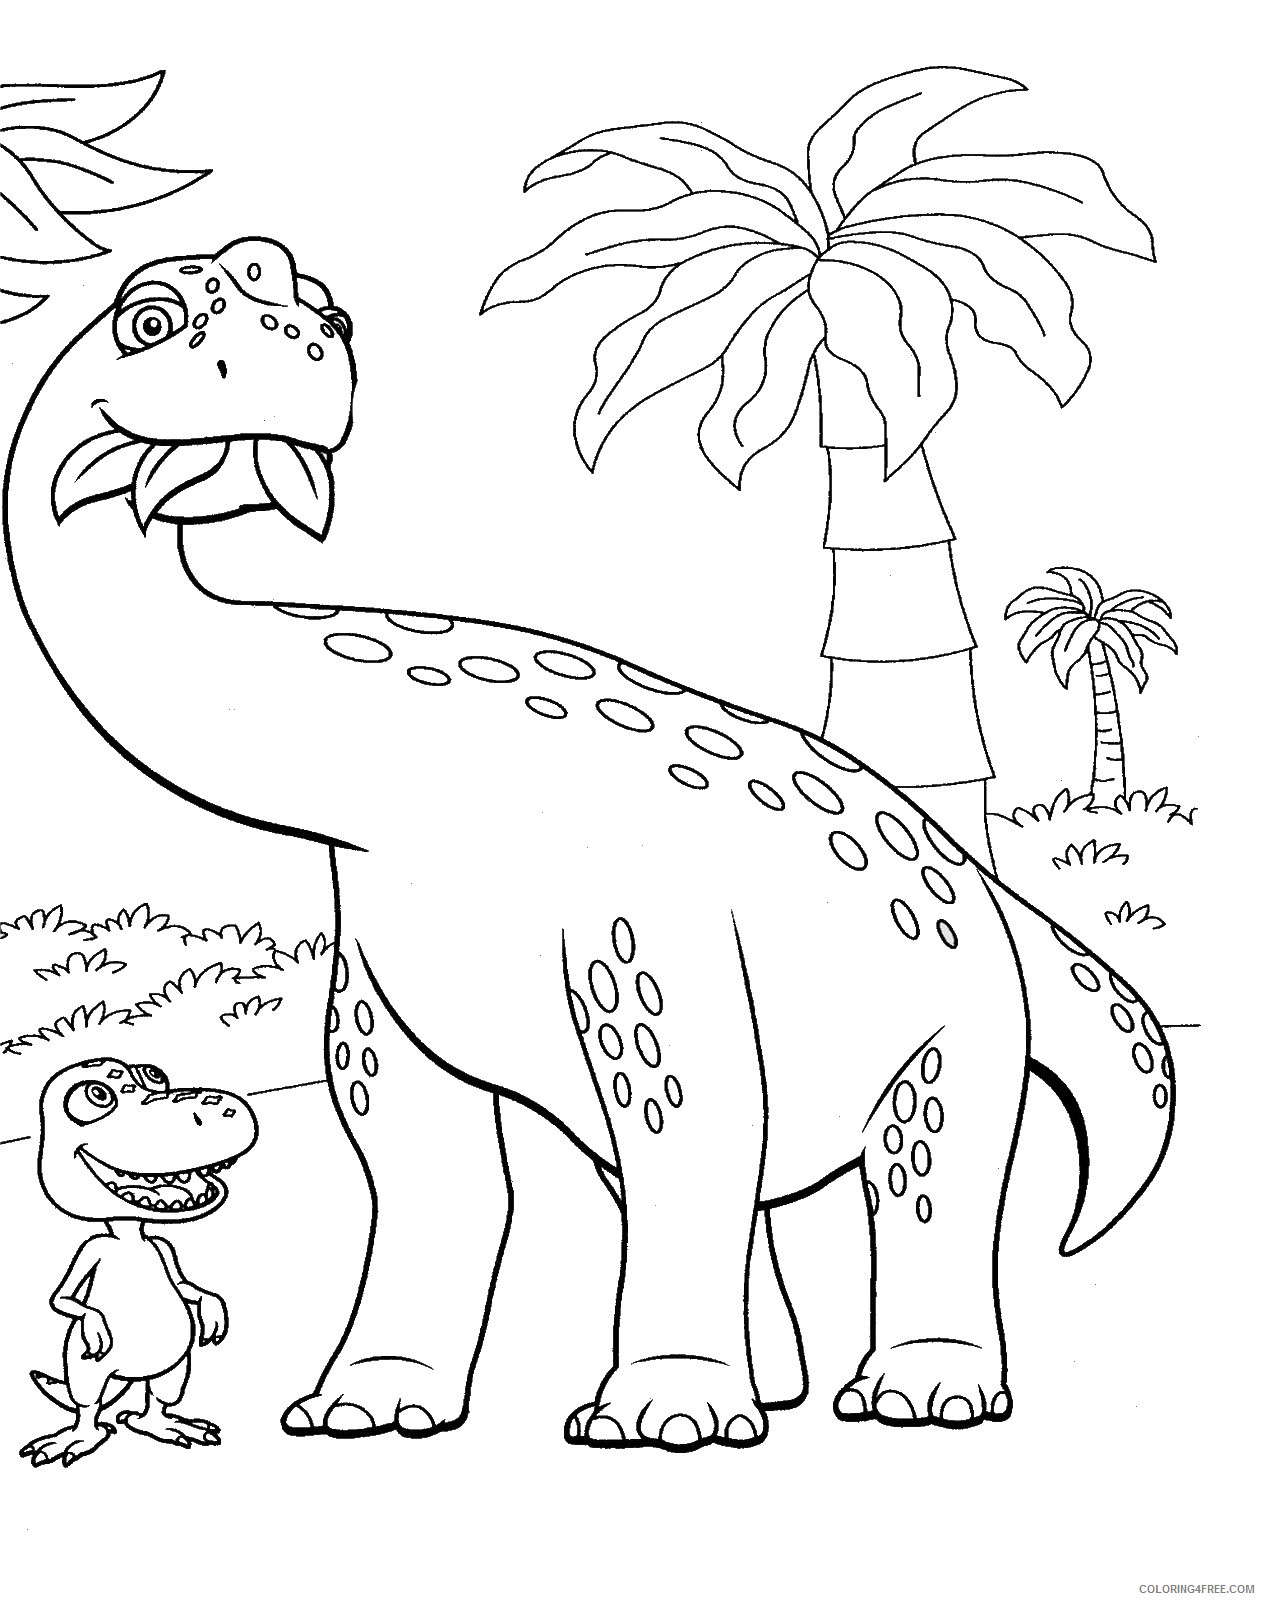 Dinosaur Train Coloring Pages Cartoons dino_train_37 Printable 2020 2180 Coloring4free